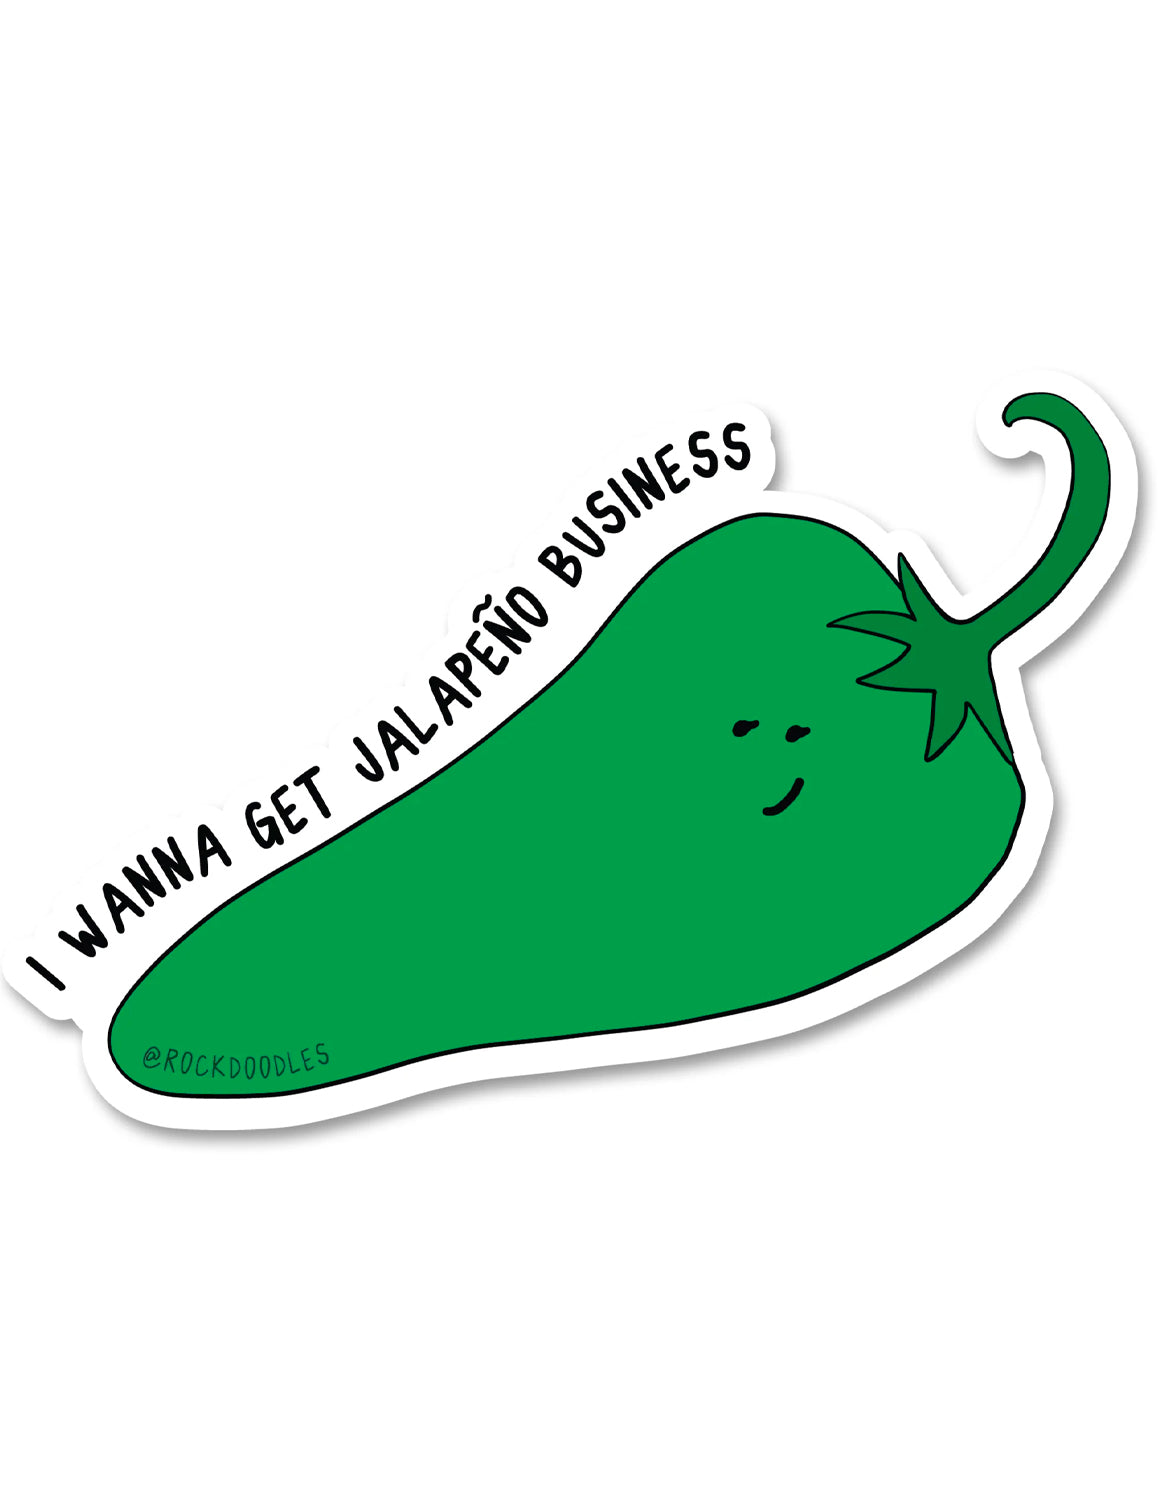 I Wanna Get Jalapeño Business Sticker - rockdoodles